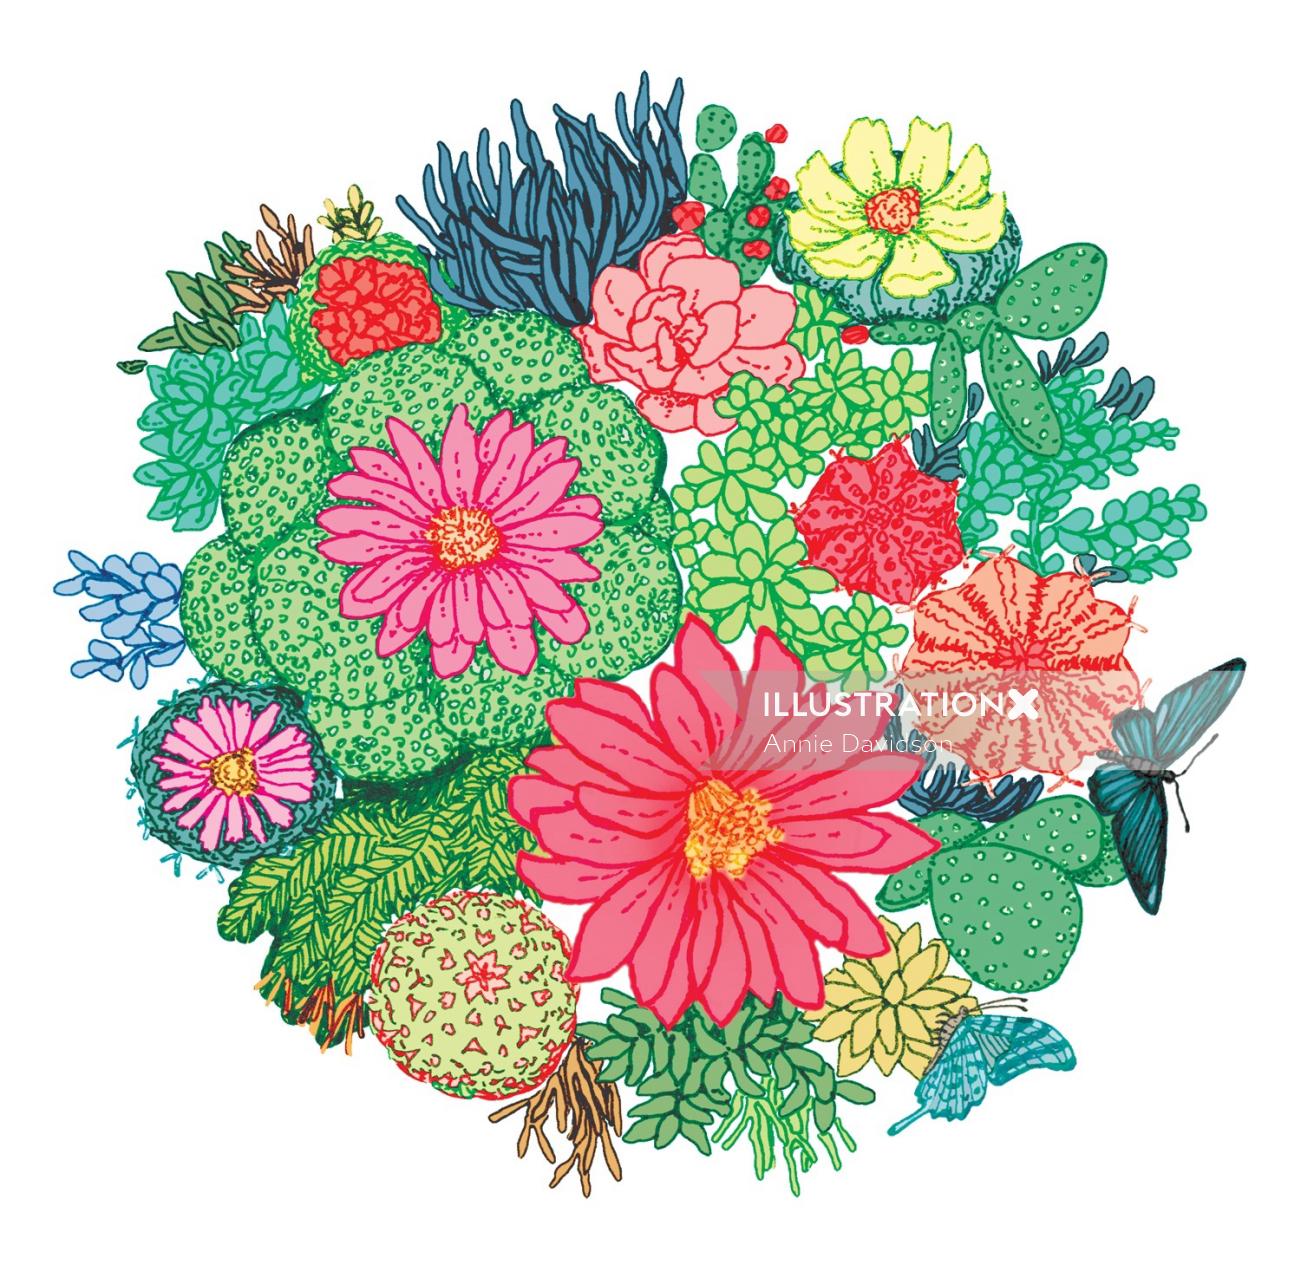 Illustration of Cactus plant